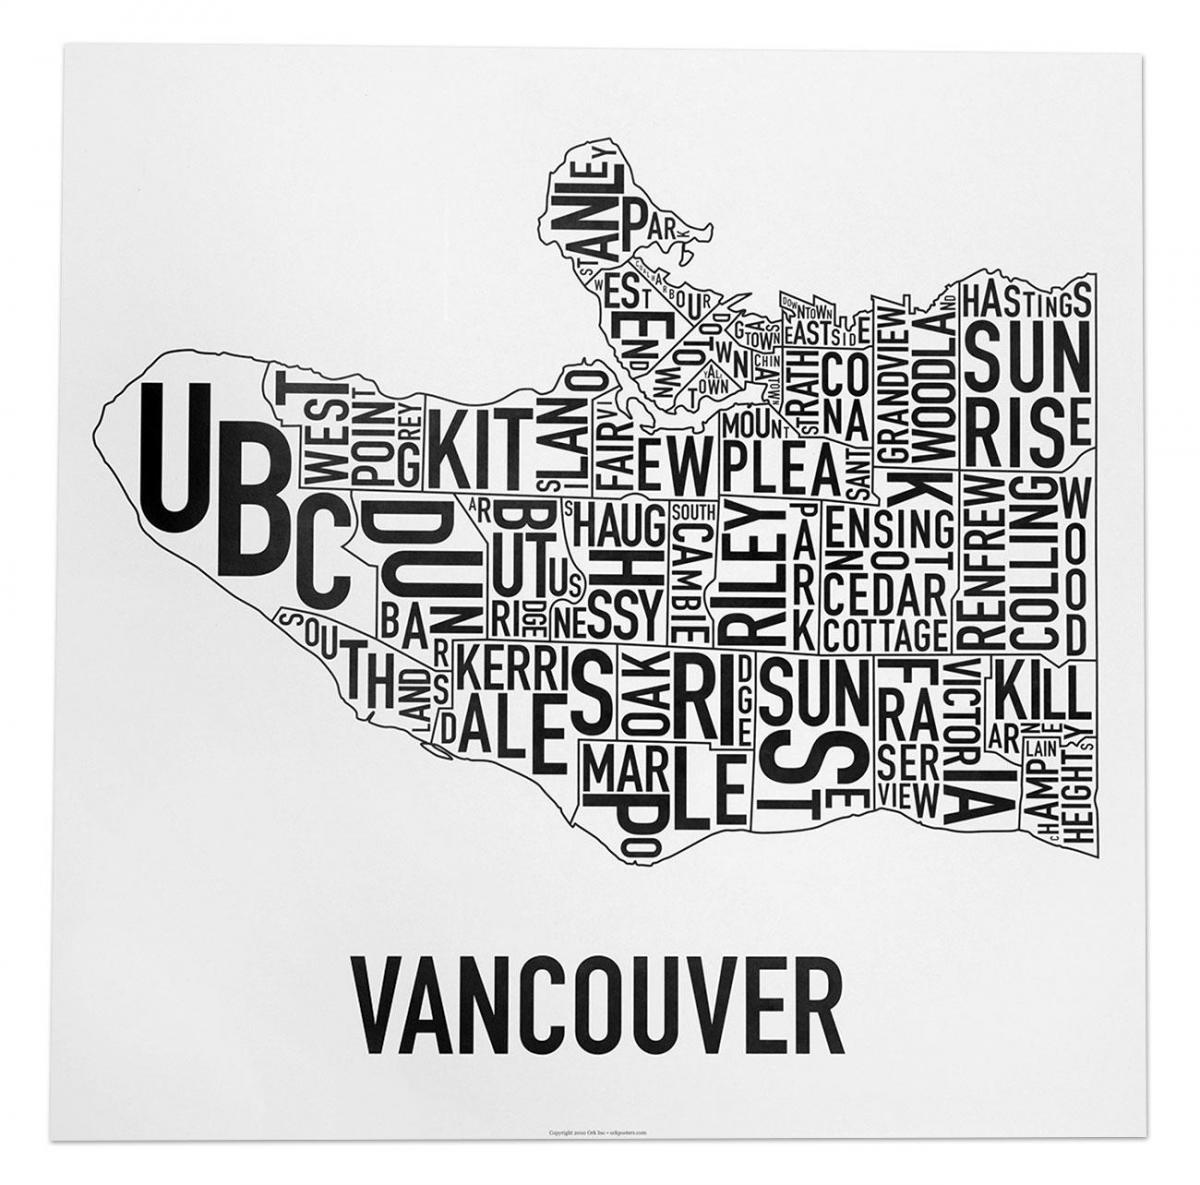 Kart poster Vancouver 